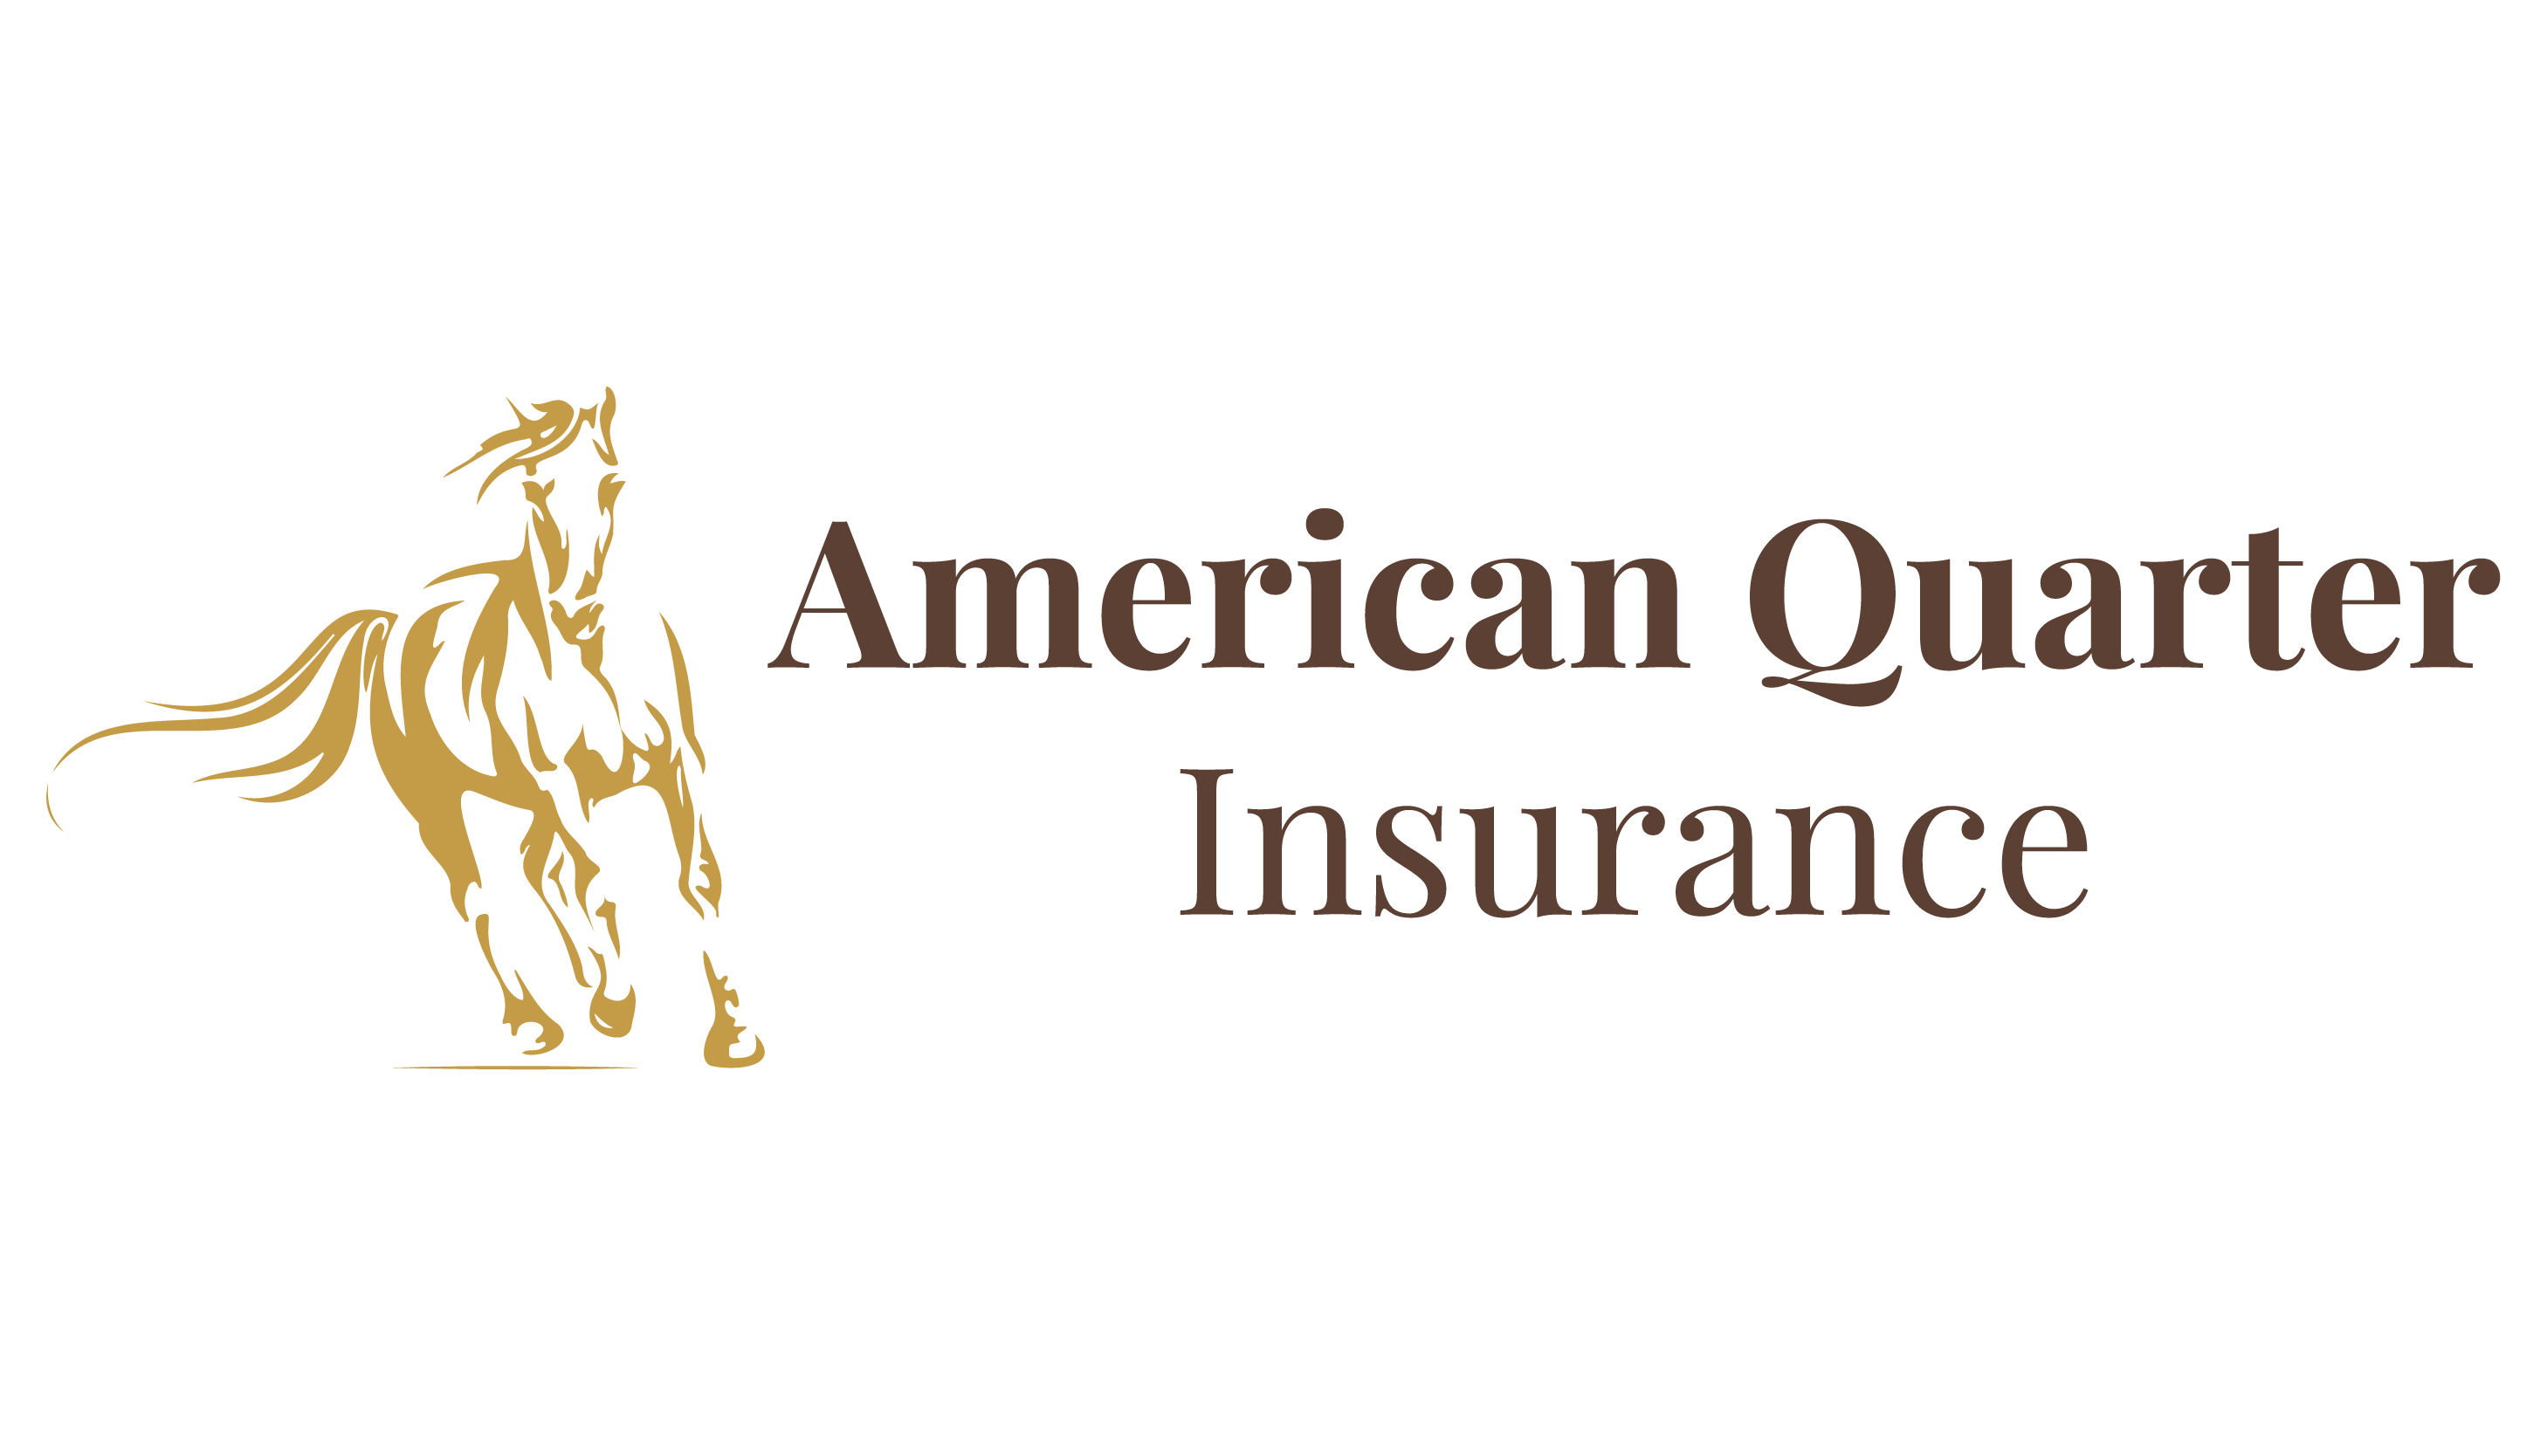 American Quarter Insurance